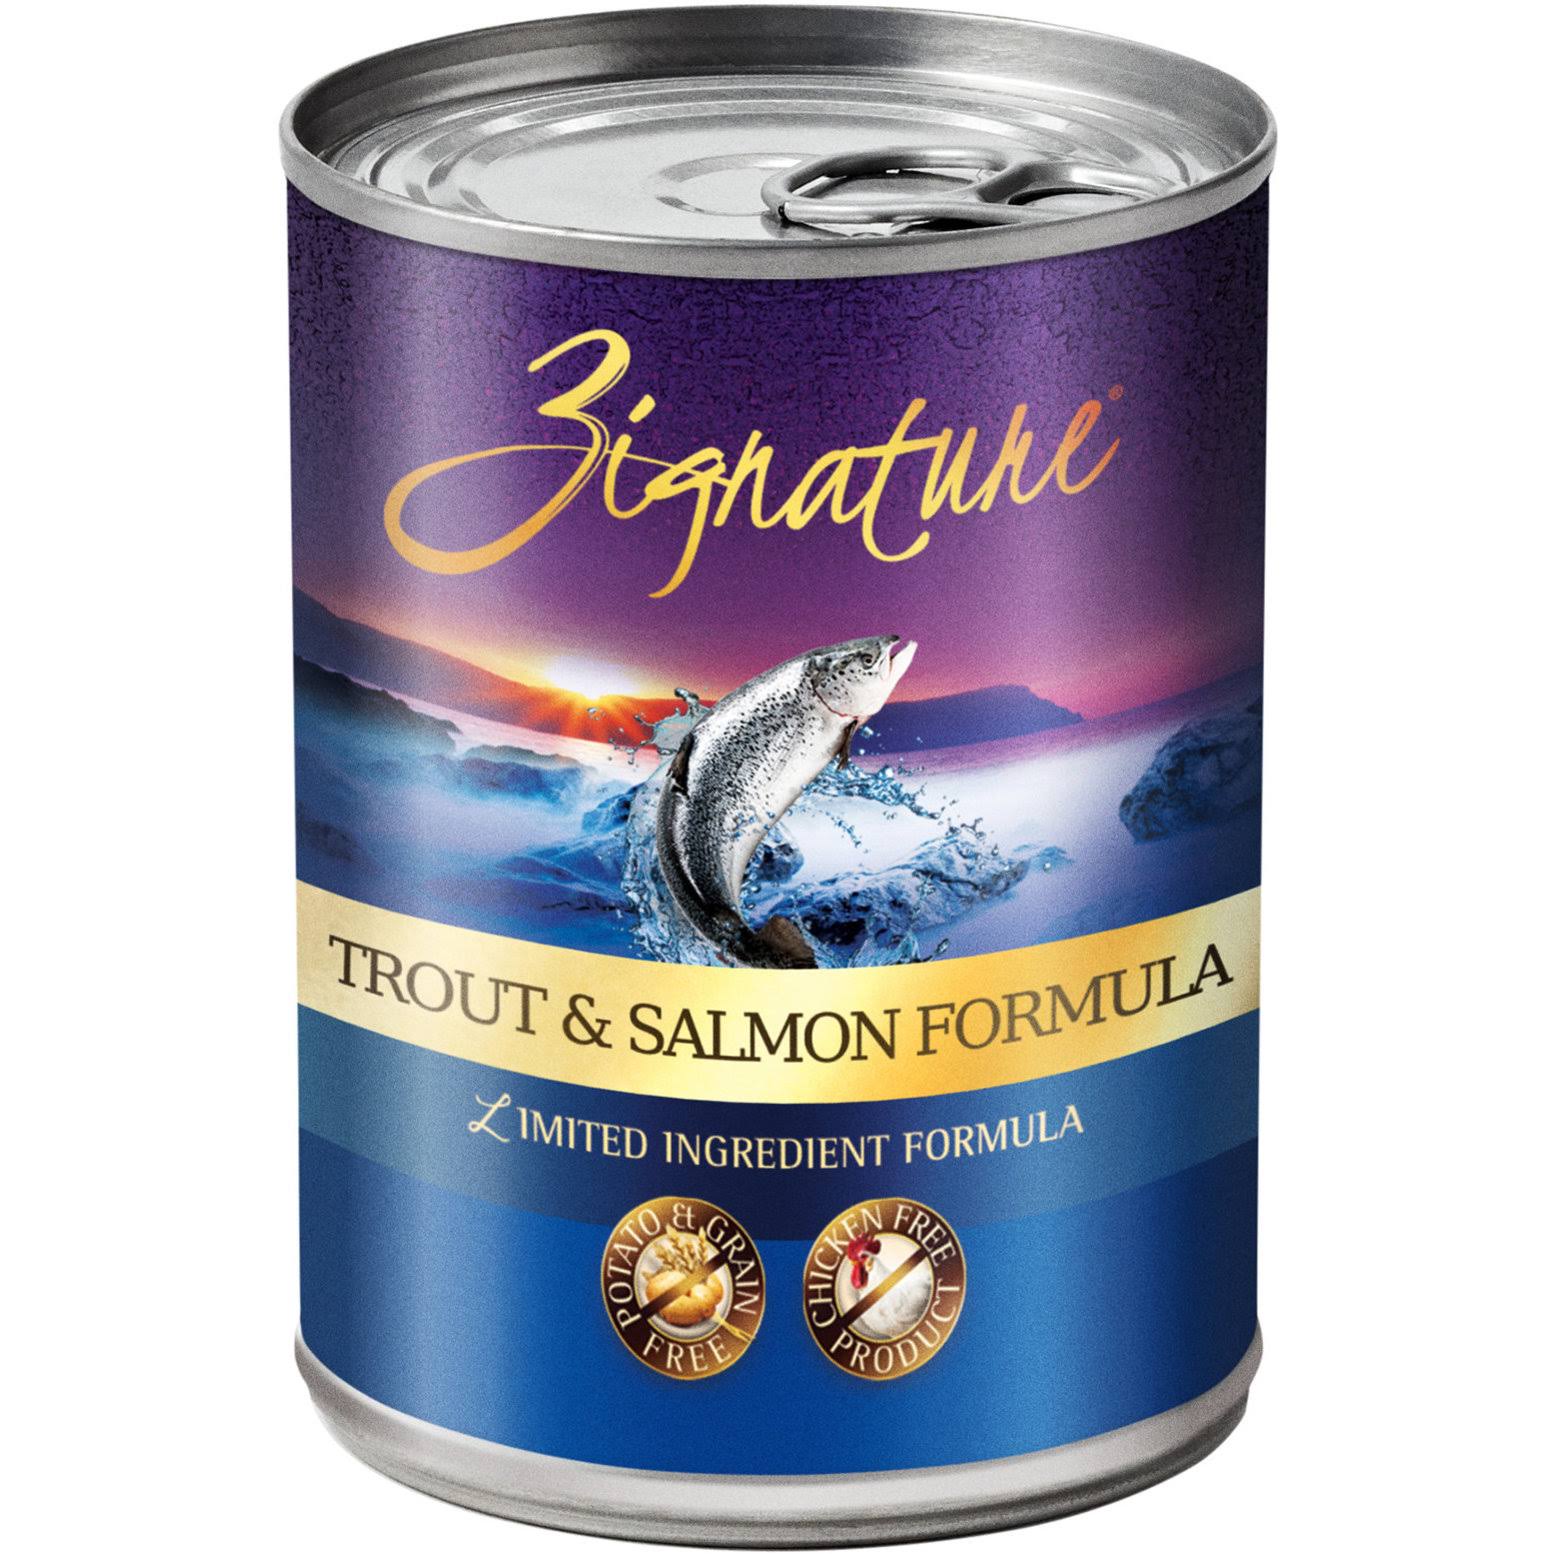 Zignature Trout & Salmon Formula Dog Food [369g]